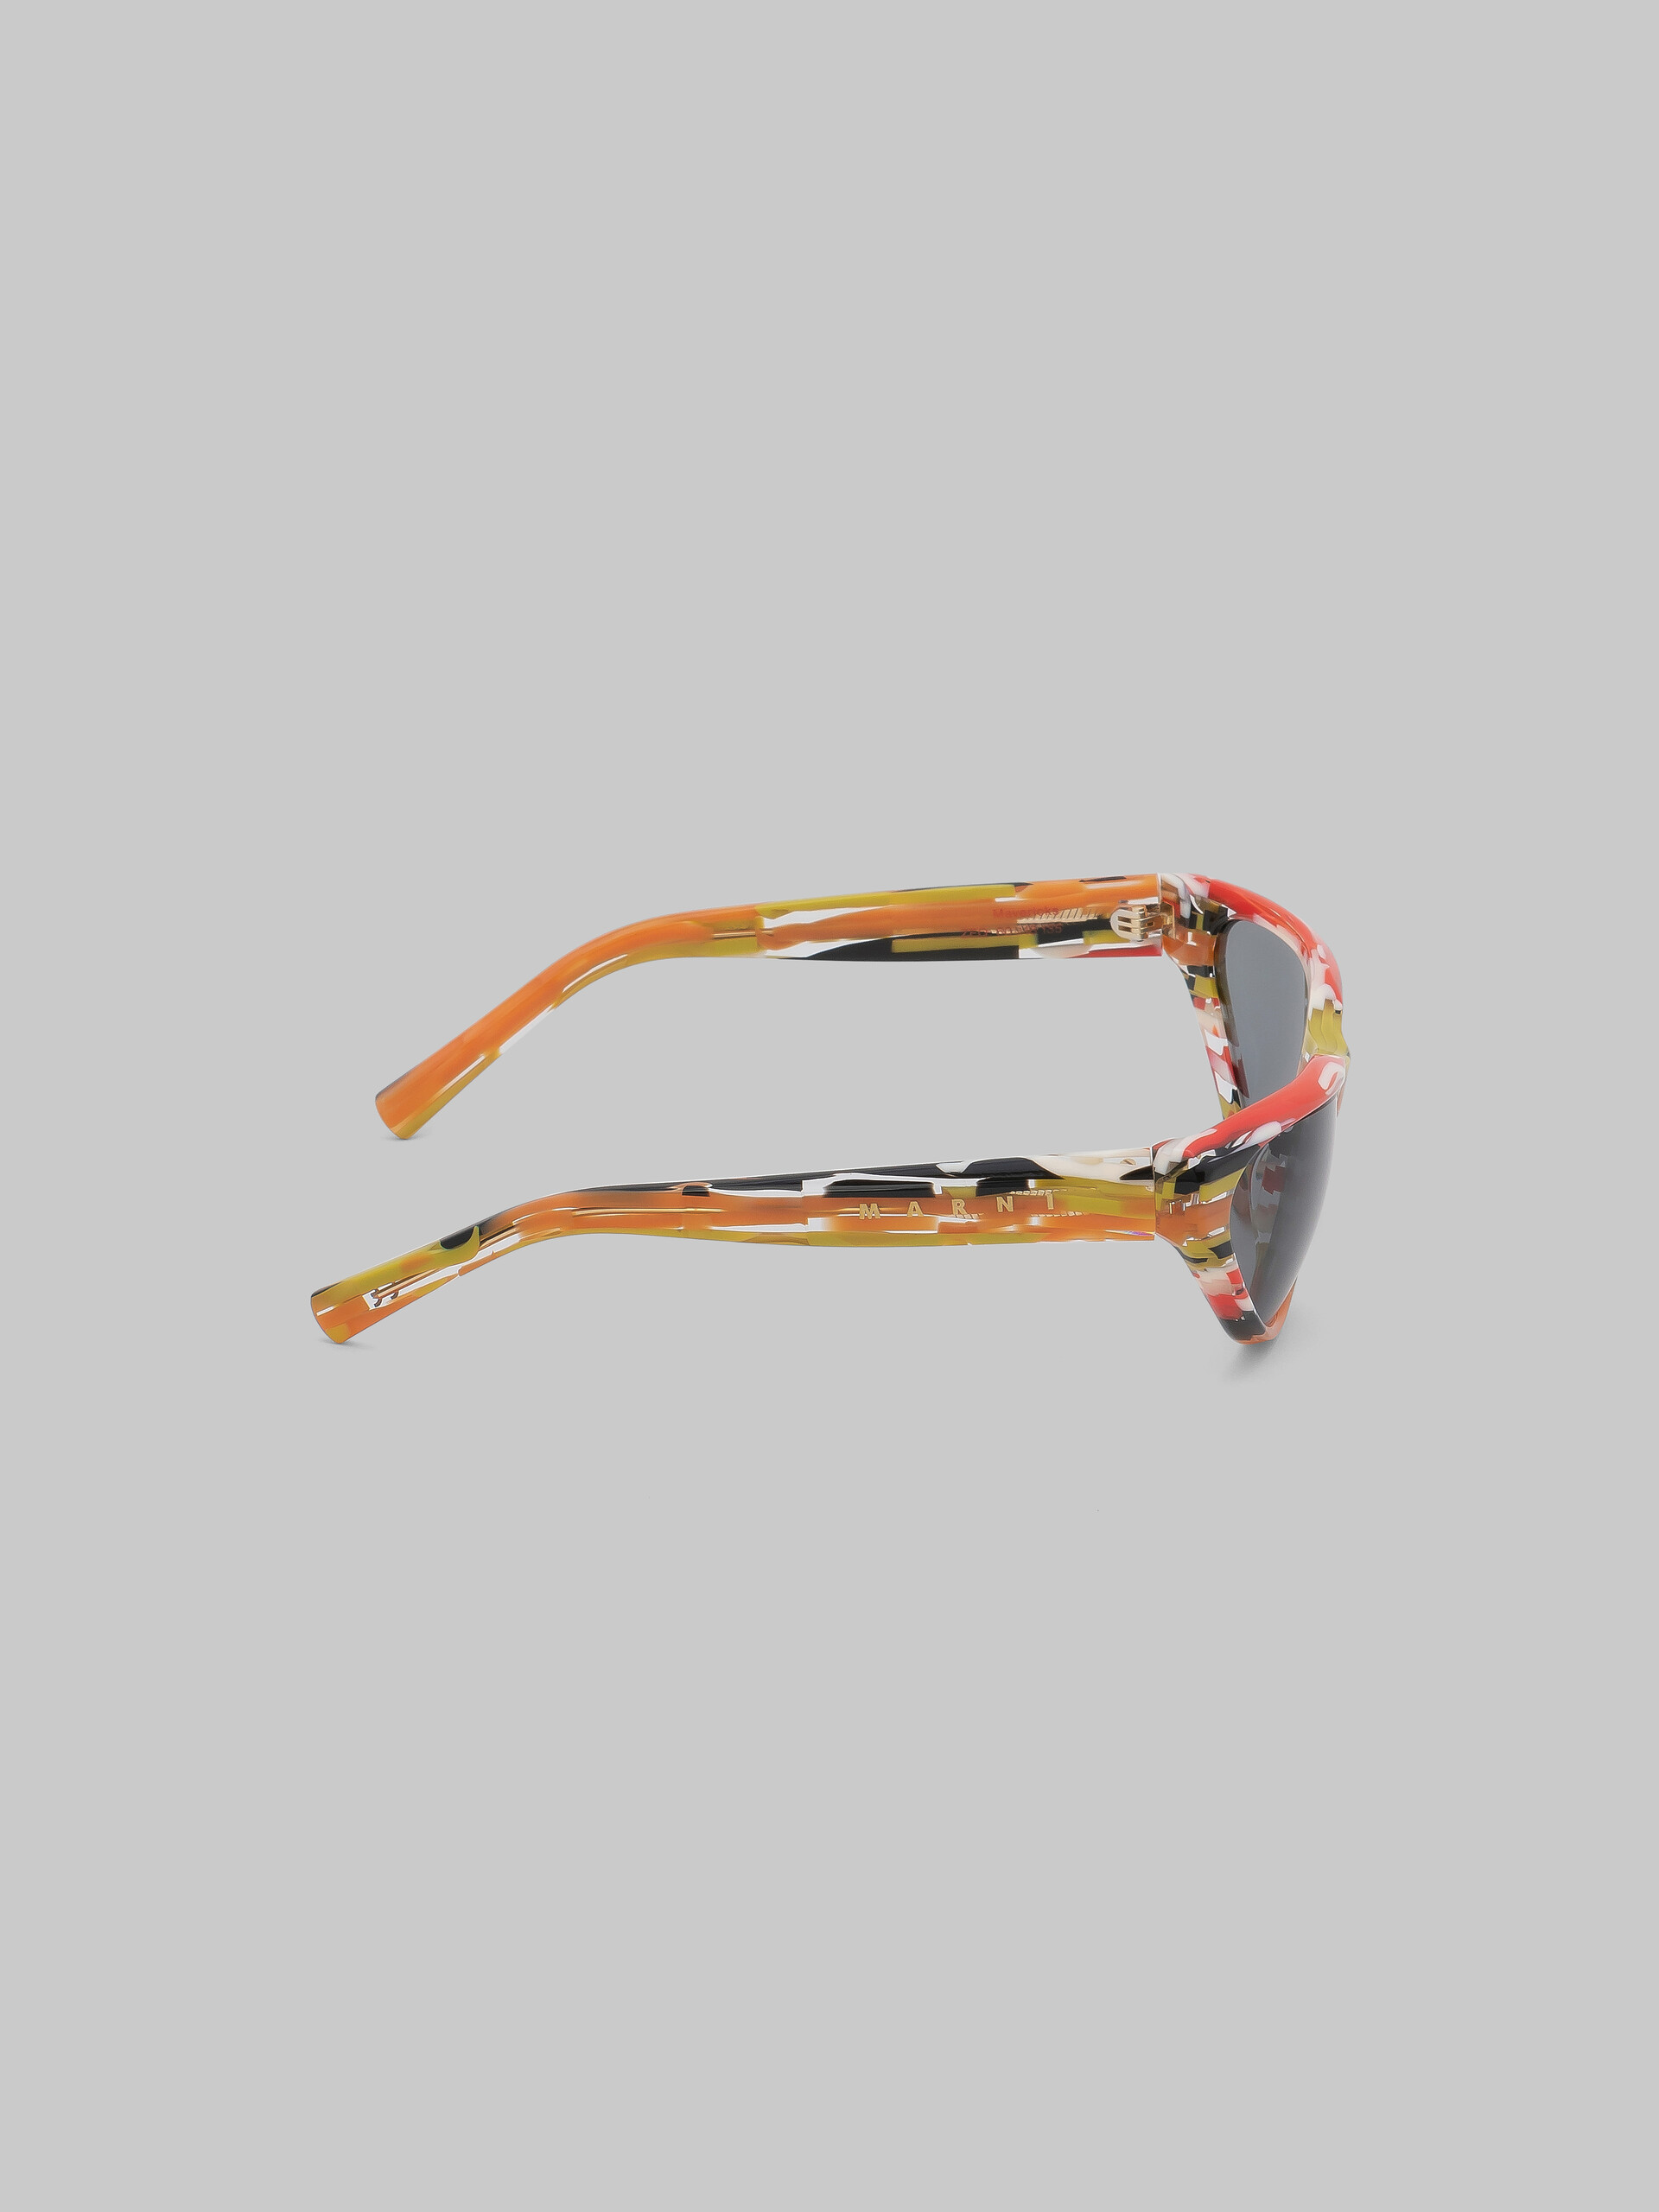 Starshell Mavericks sunglasses - Optical - Image 4